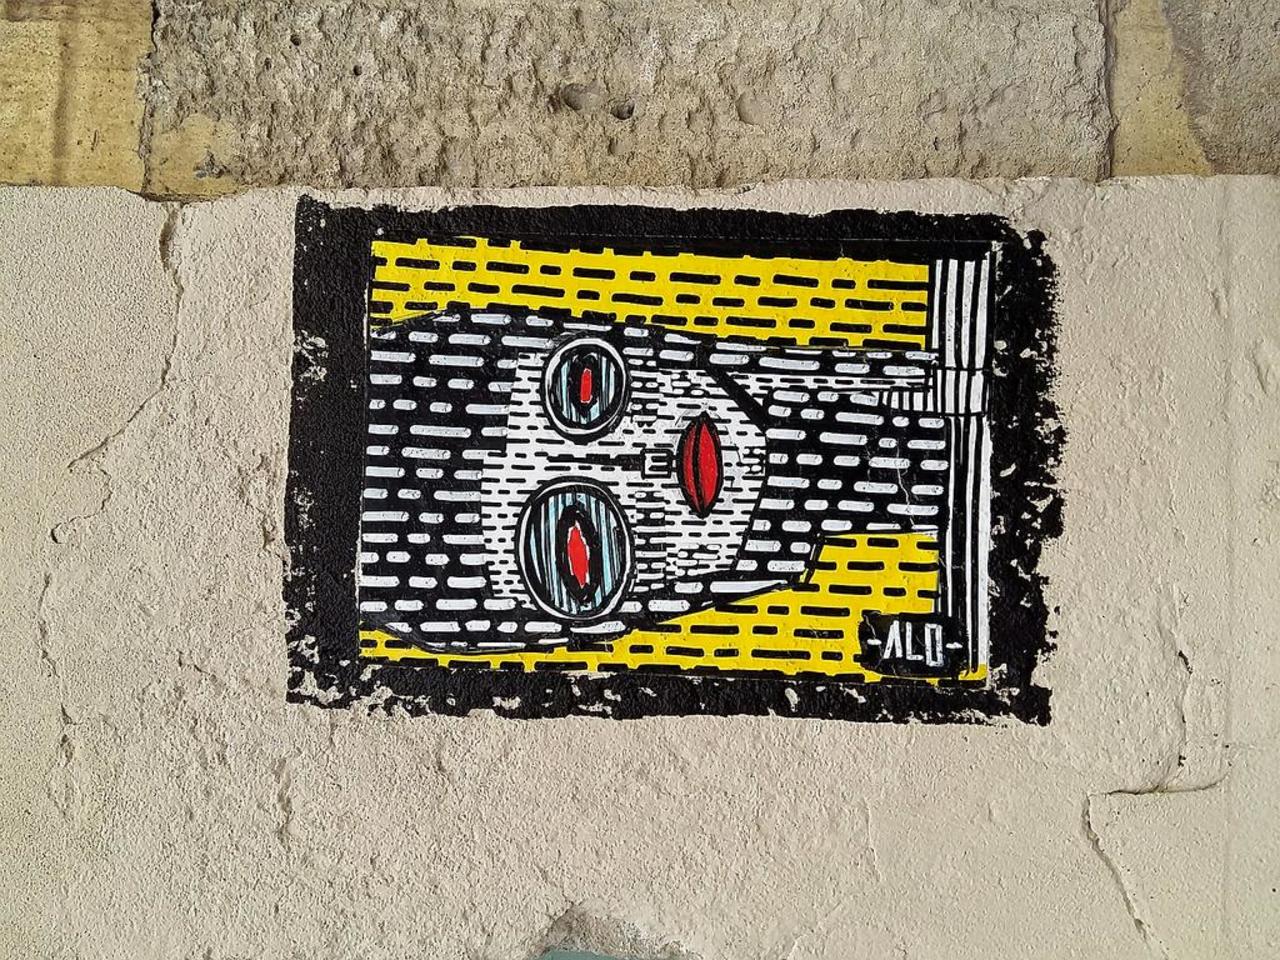 RT @urbacolors: Street Art by alo_art in #Paris http://www.urbacolors.com #art #mural #graffiti #streetart http://t.co/1x1lokoKm6